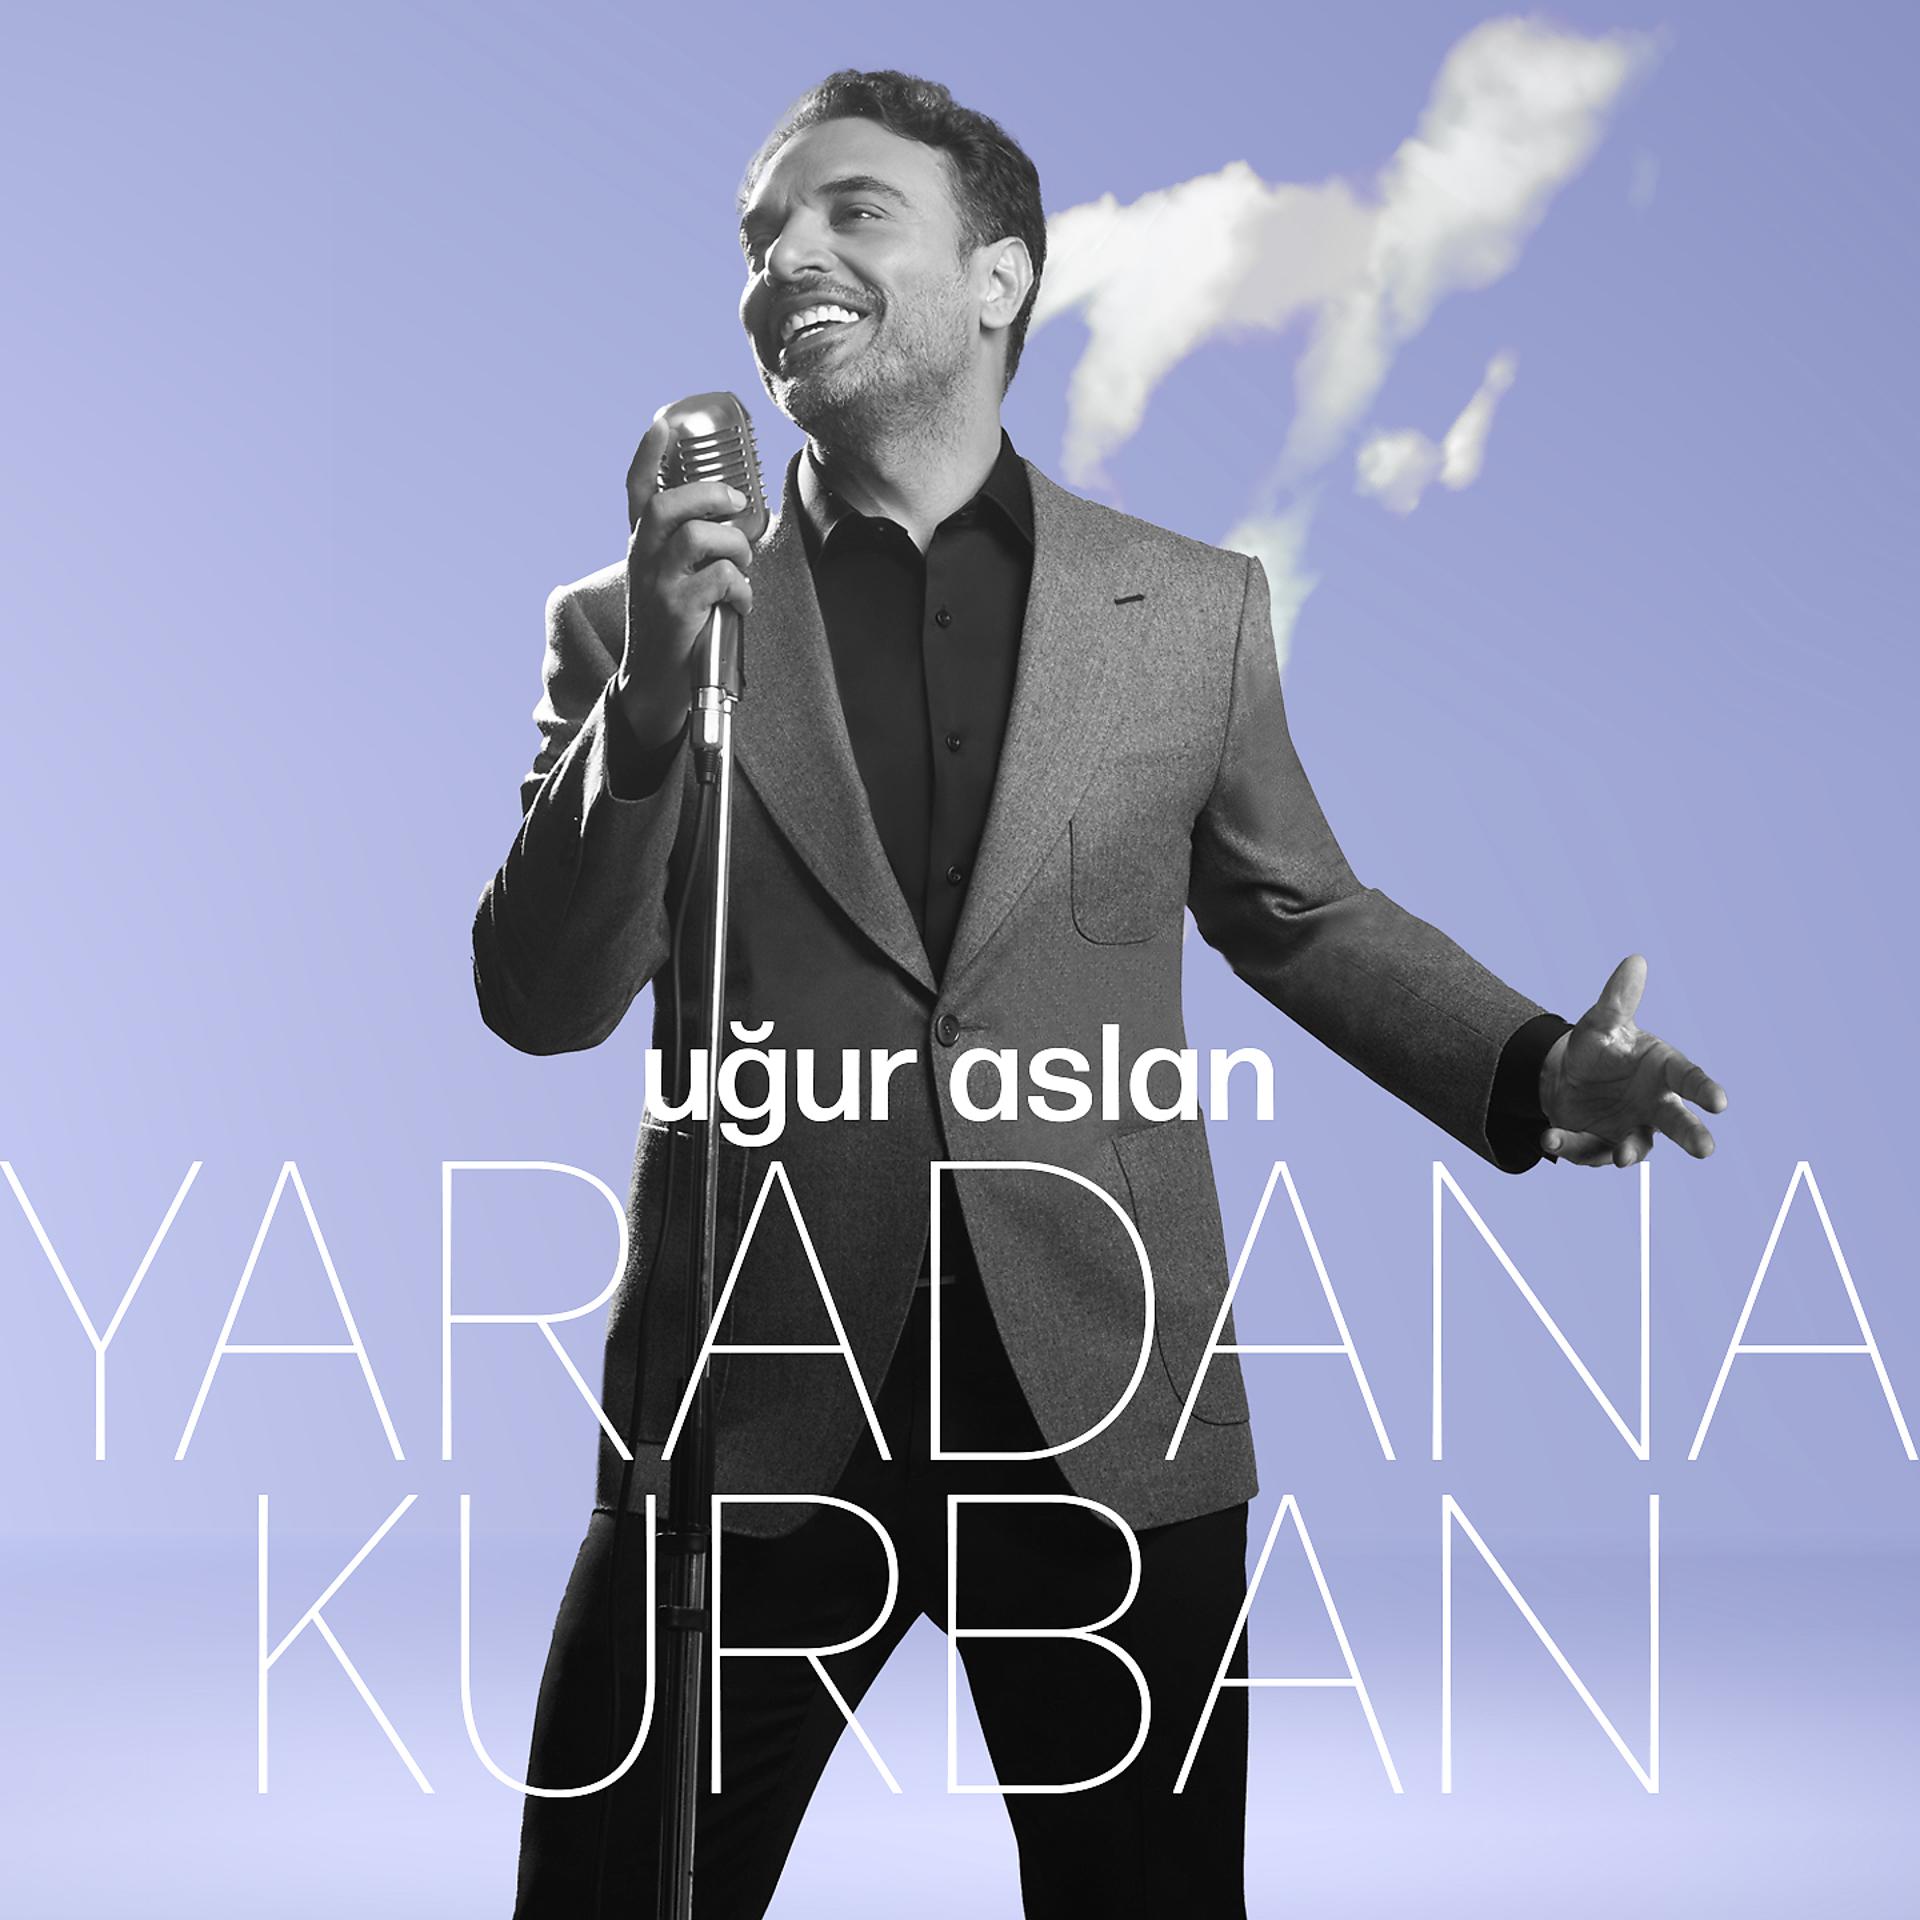 Постер альбома Yaradana Kurban